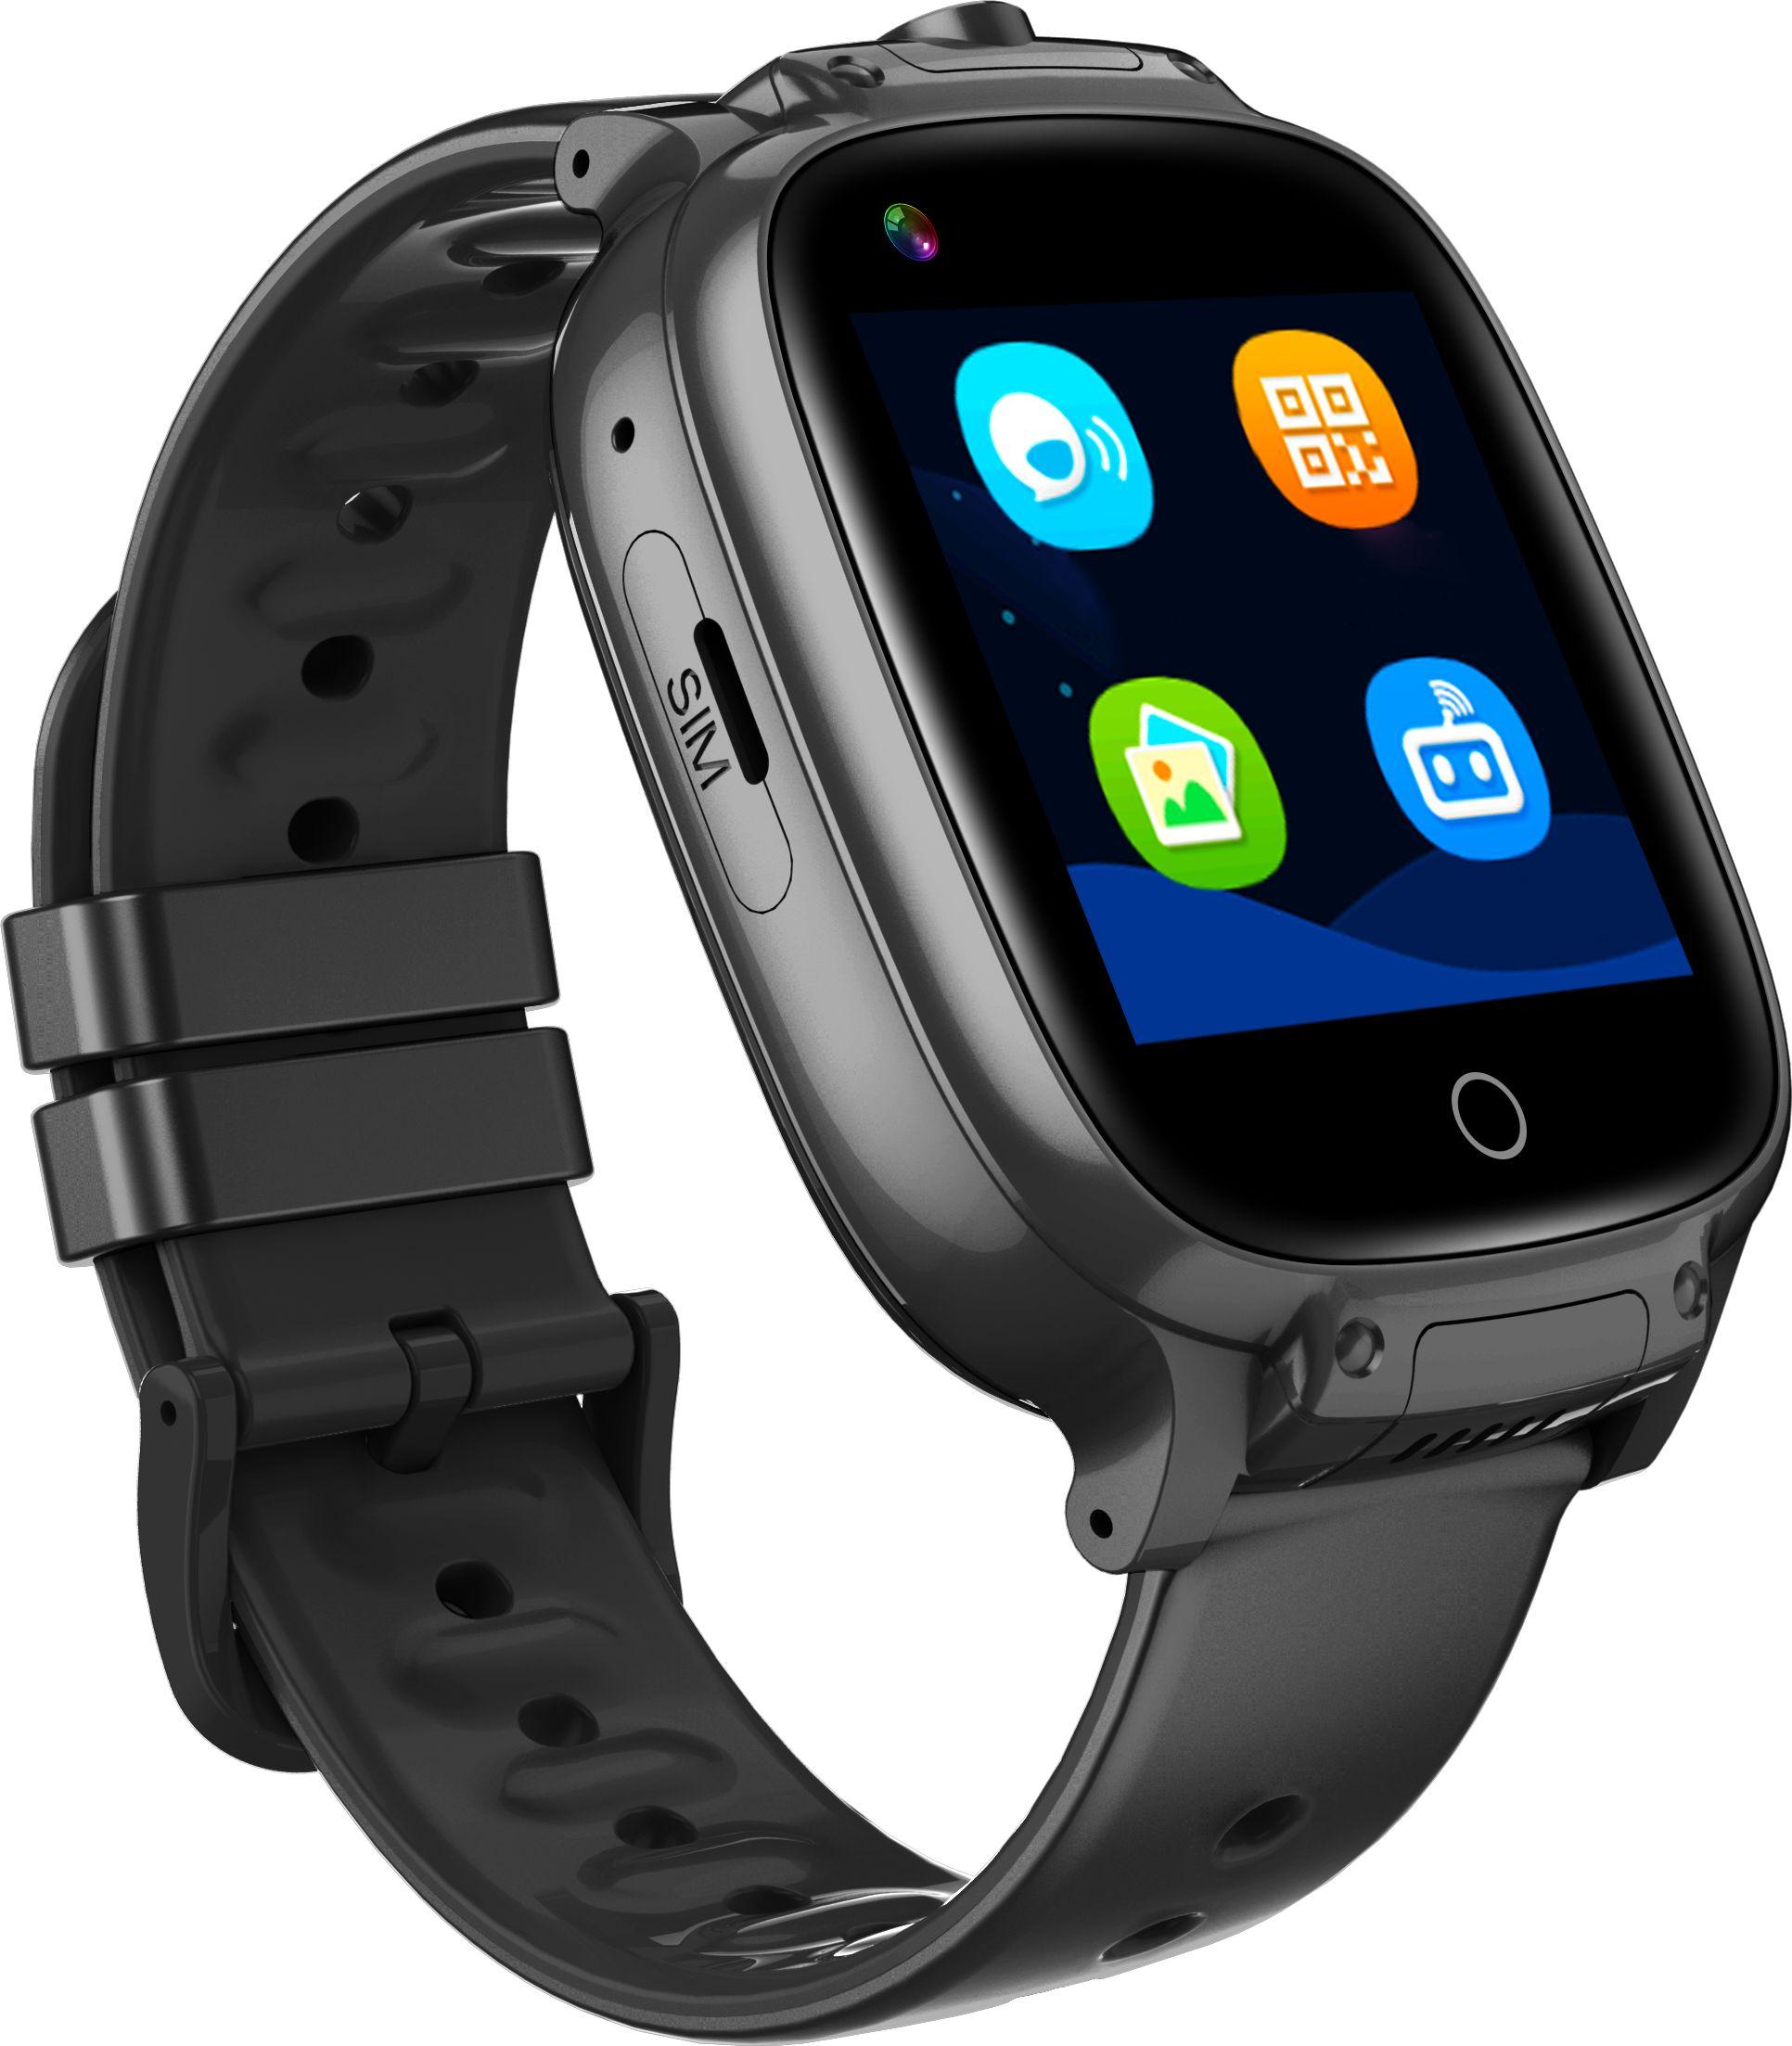 Gummi, Schwarz Twin Kids 4G ELECTRONICS Smartwatch Schawrz + Kunststoff GARETT Smartwatch Metall